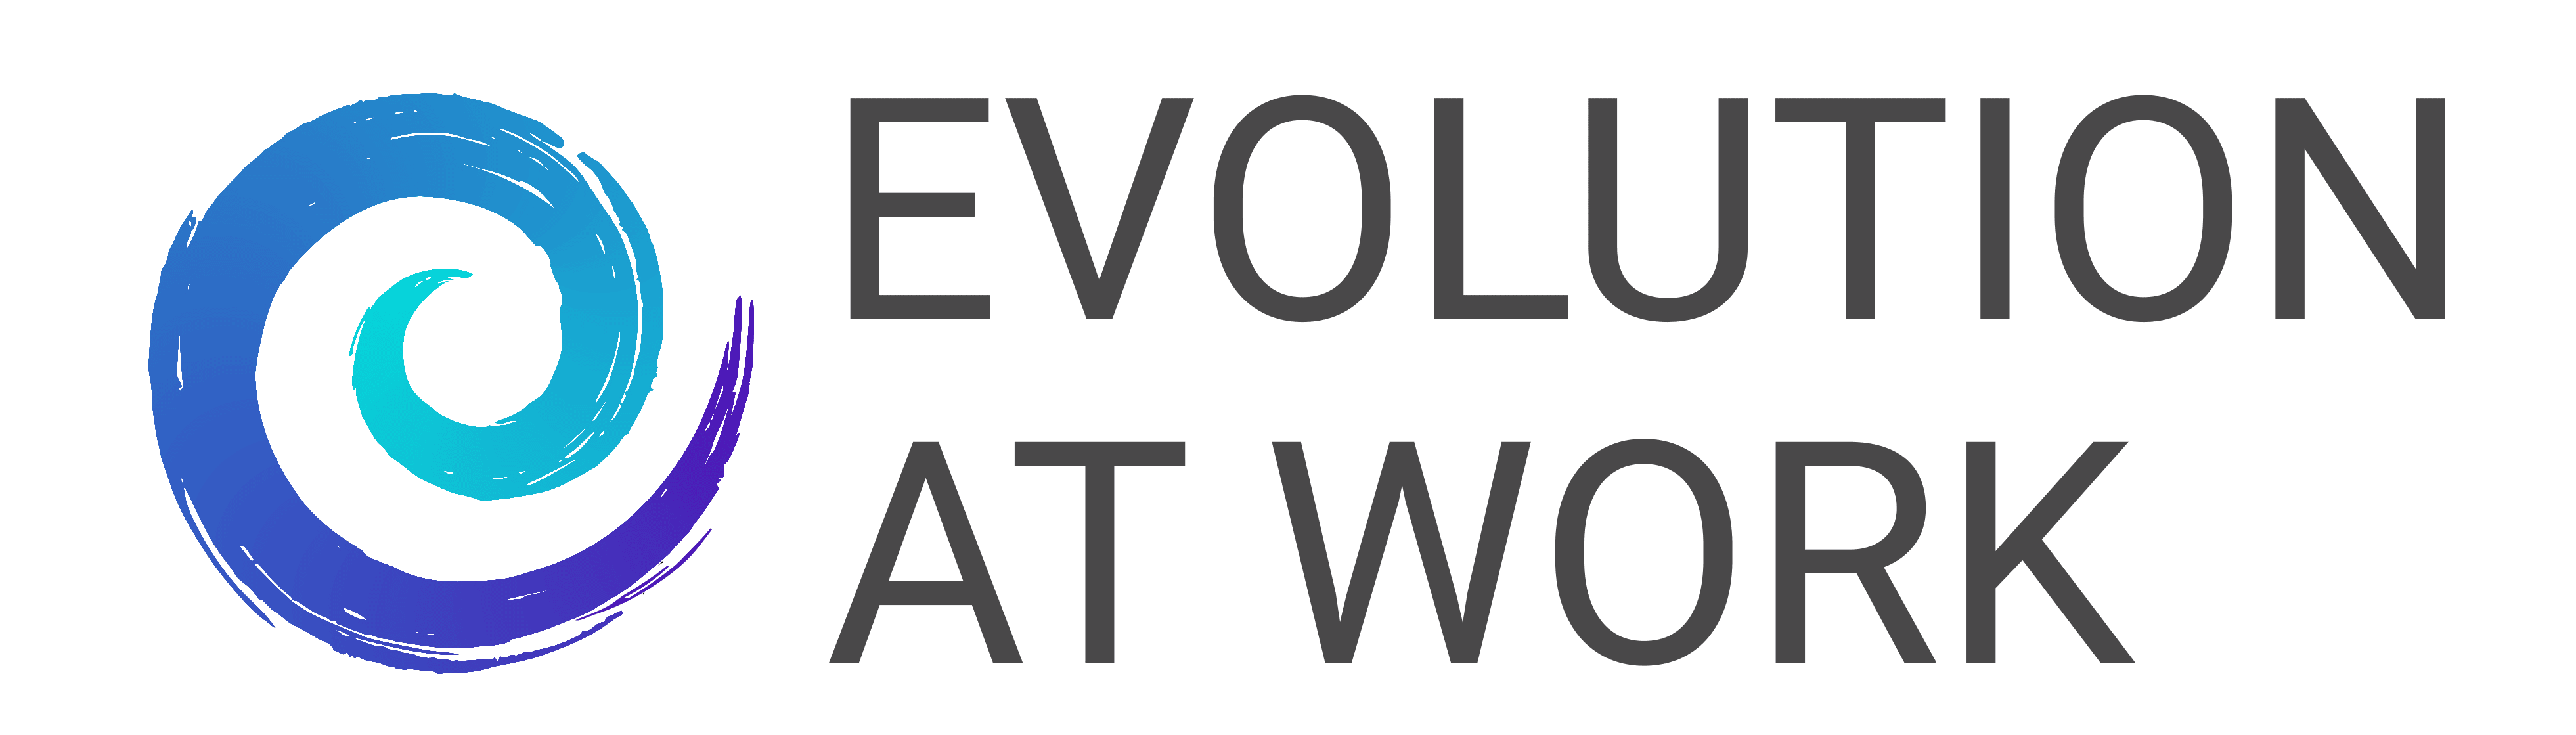 evolution at work logo